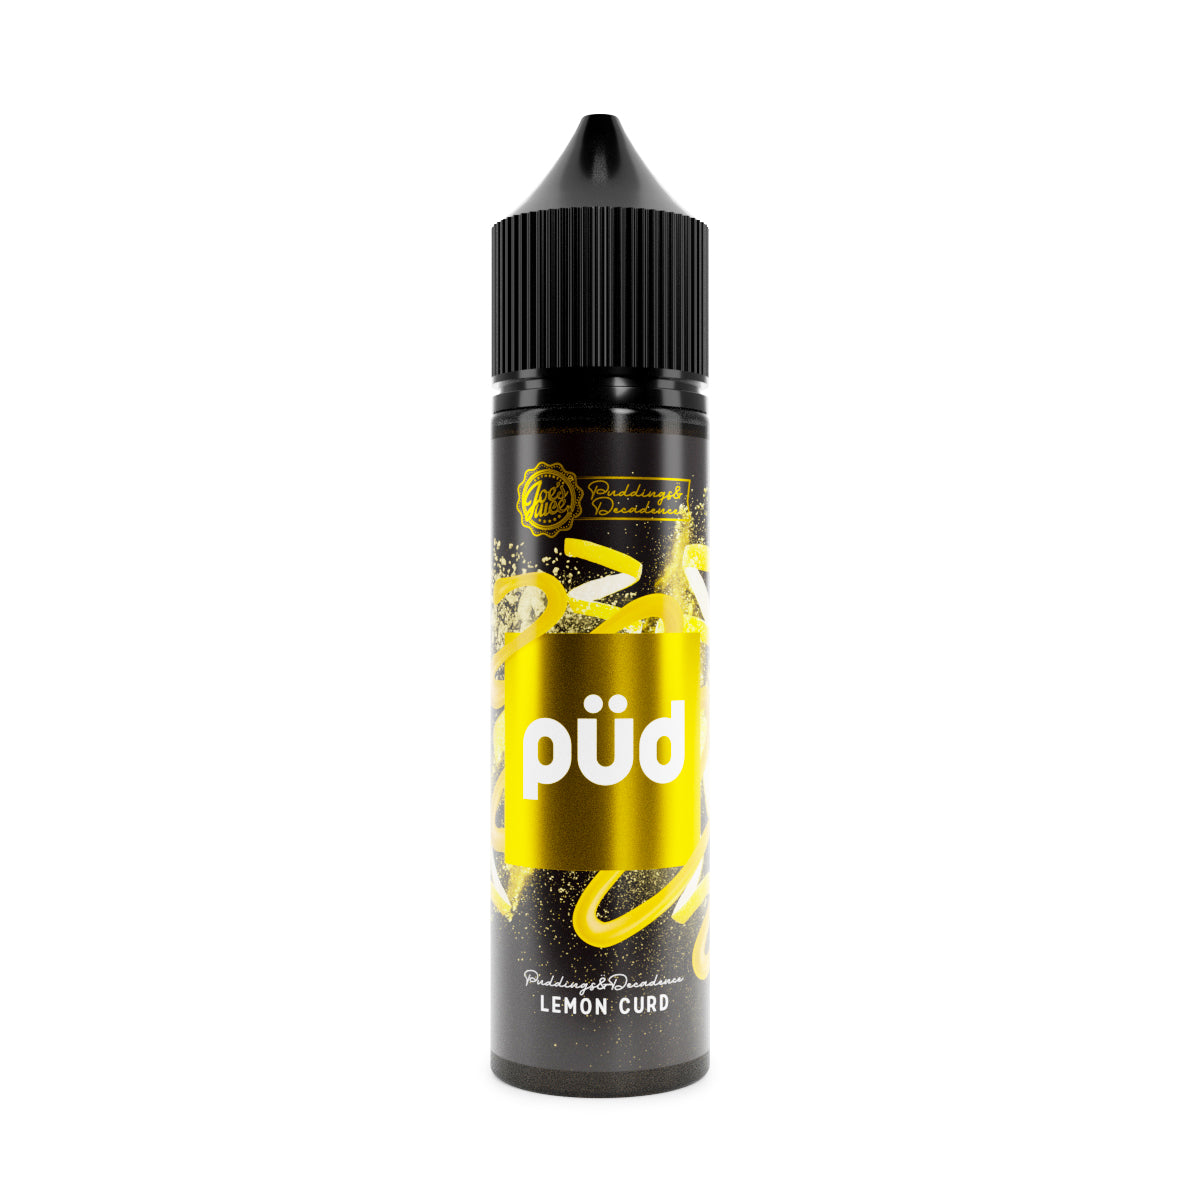 Pud Pudding & Decadence Lemon Curd 0mg 50ml Shortfill E-Liquid